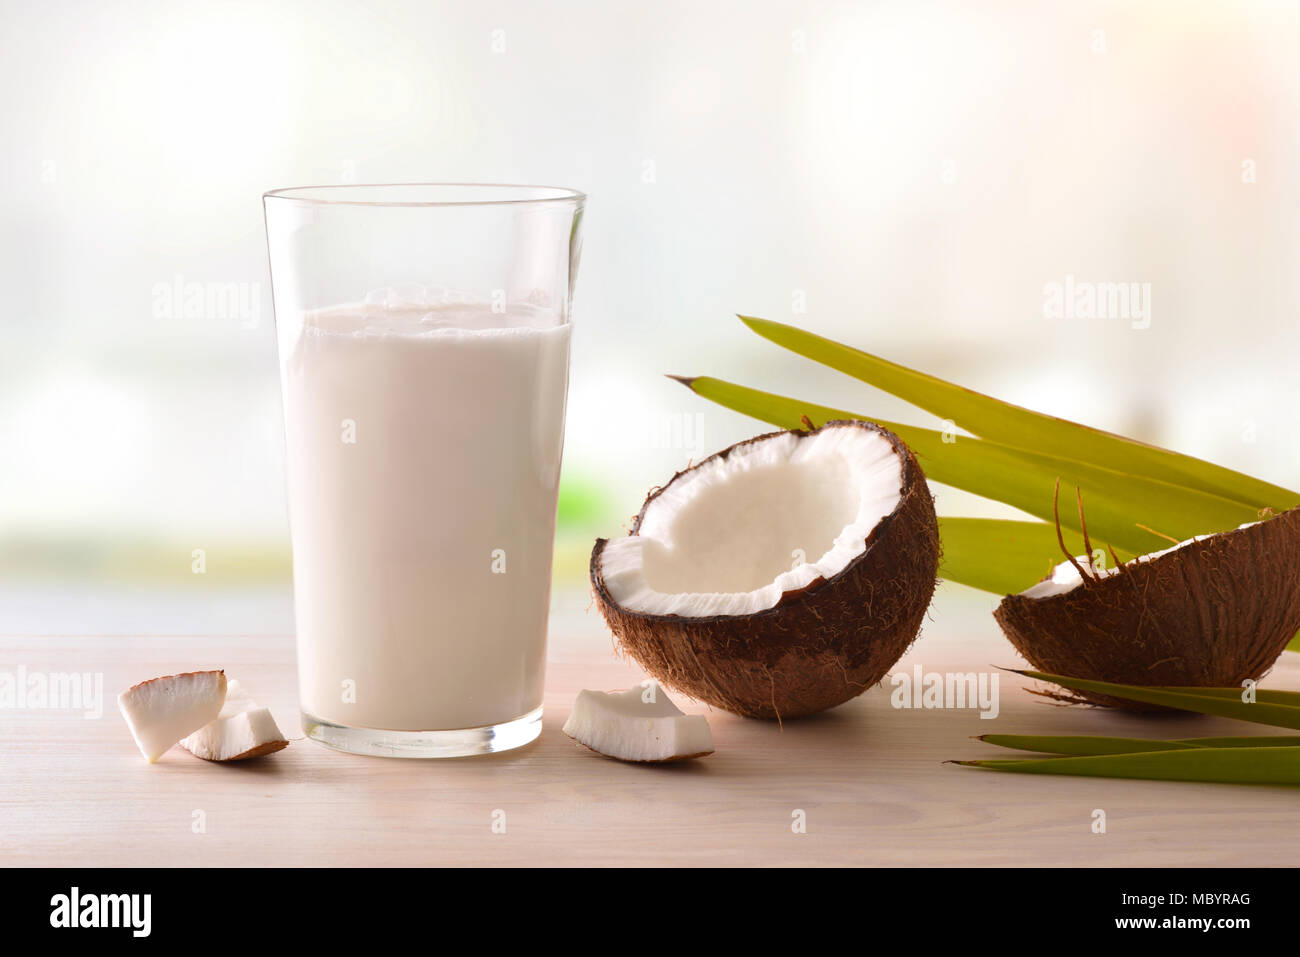 Планто кокосовое молоко. Альтернативное молоко кокосовое. Кокосовое молоко в стакане. Кокосовое молоко в стекле. Кокосовое молоко виды.